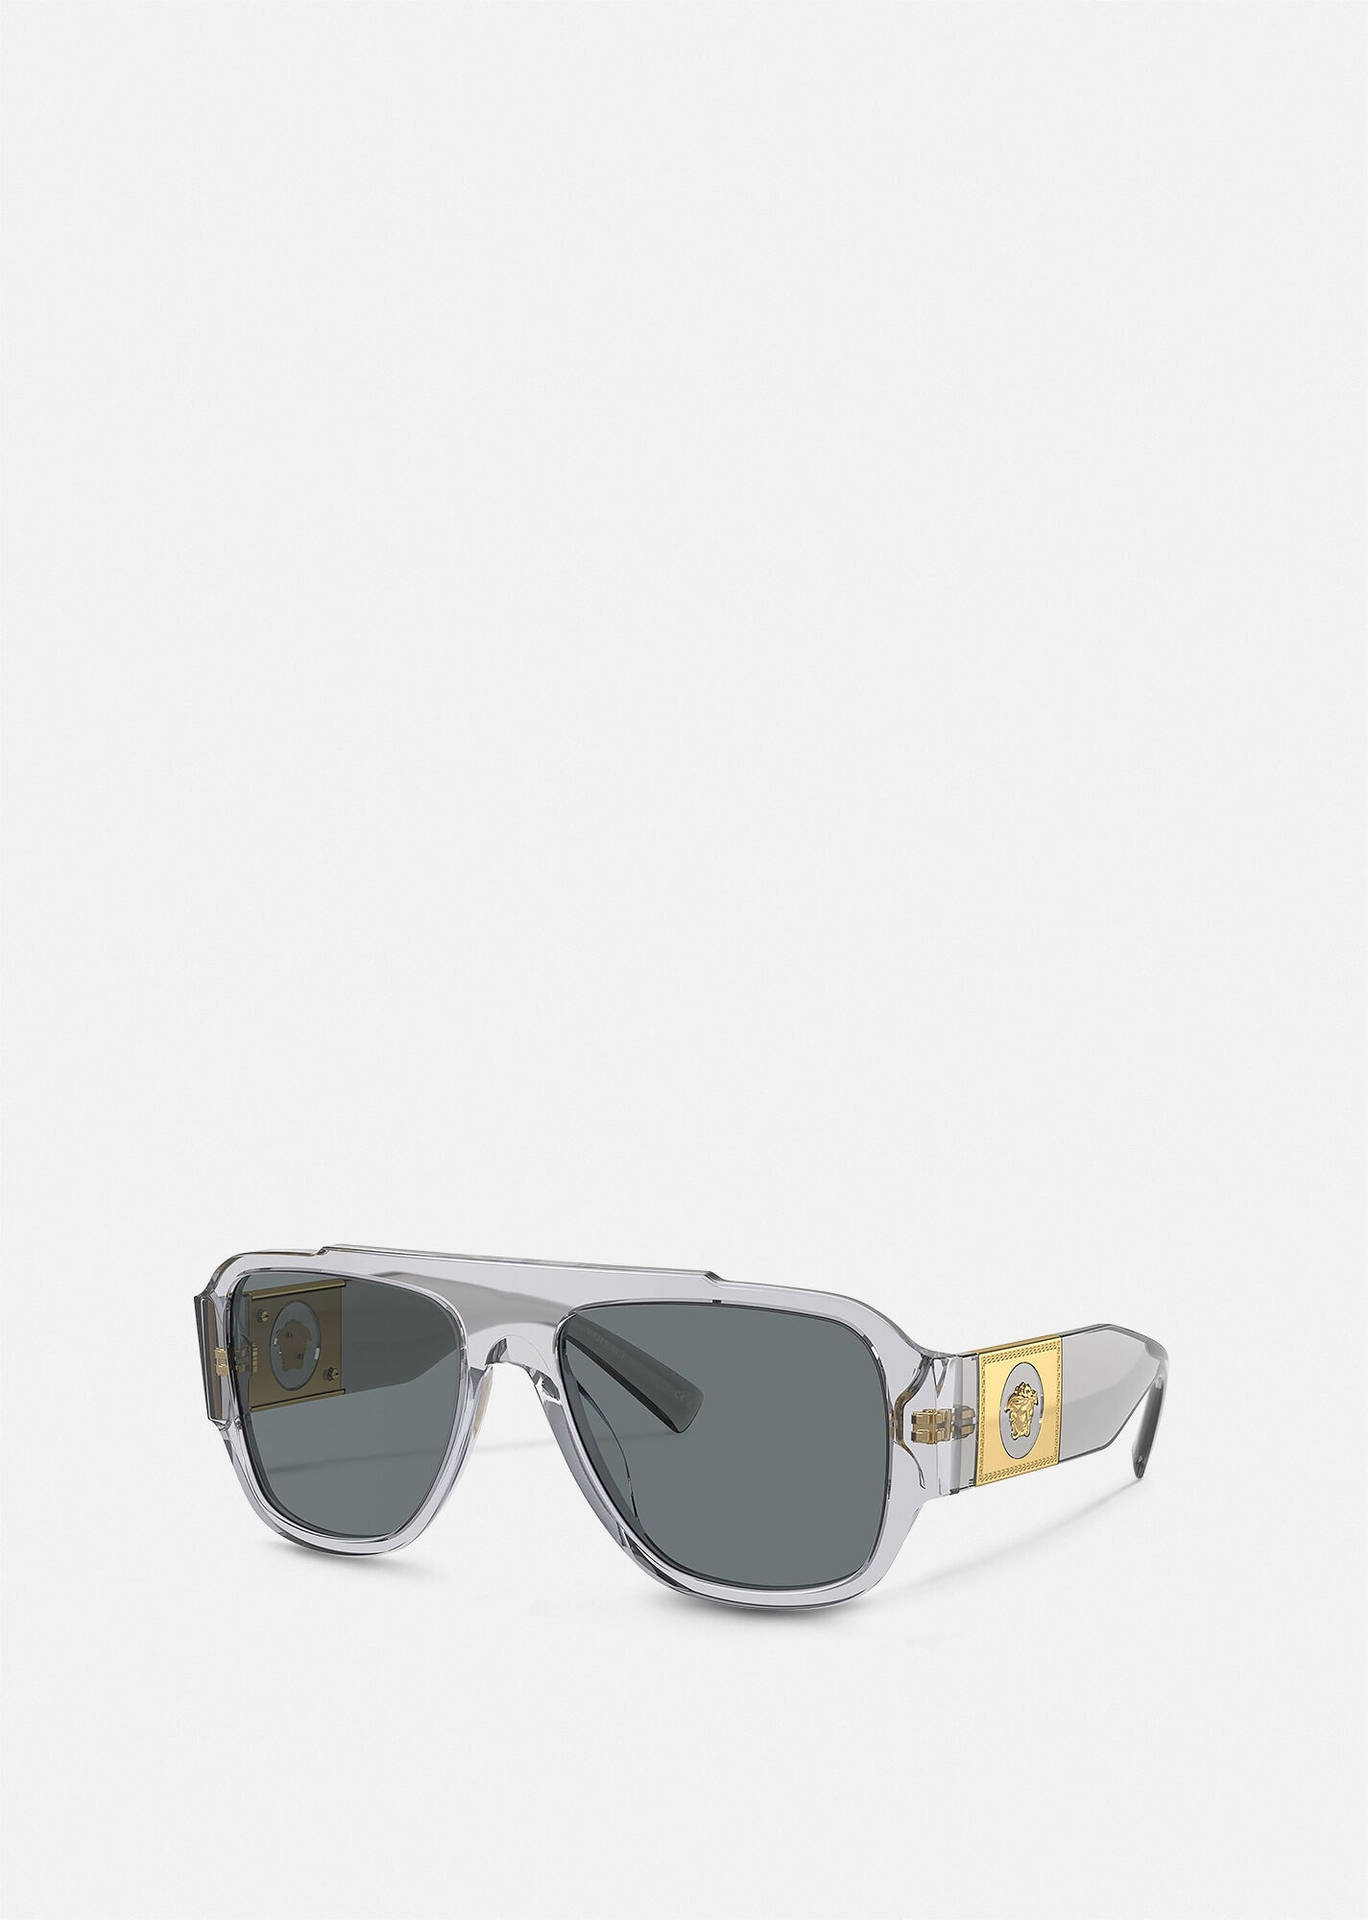 Download Versace Men's Macy Sunglasses Wallpaper | Wallpapers.com